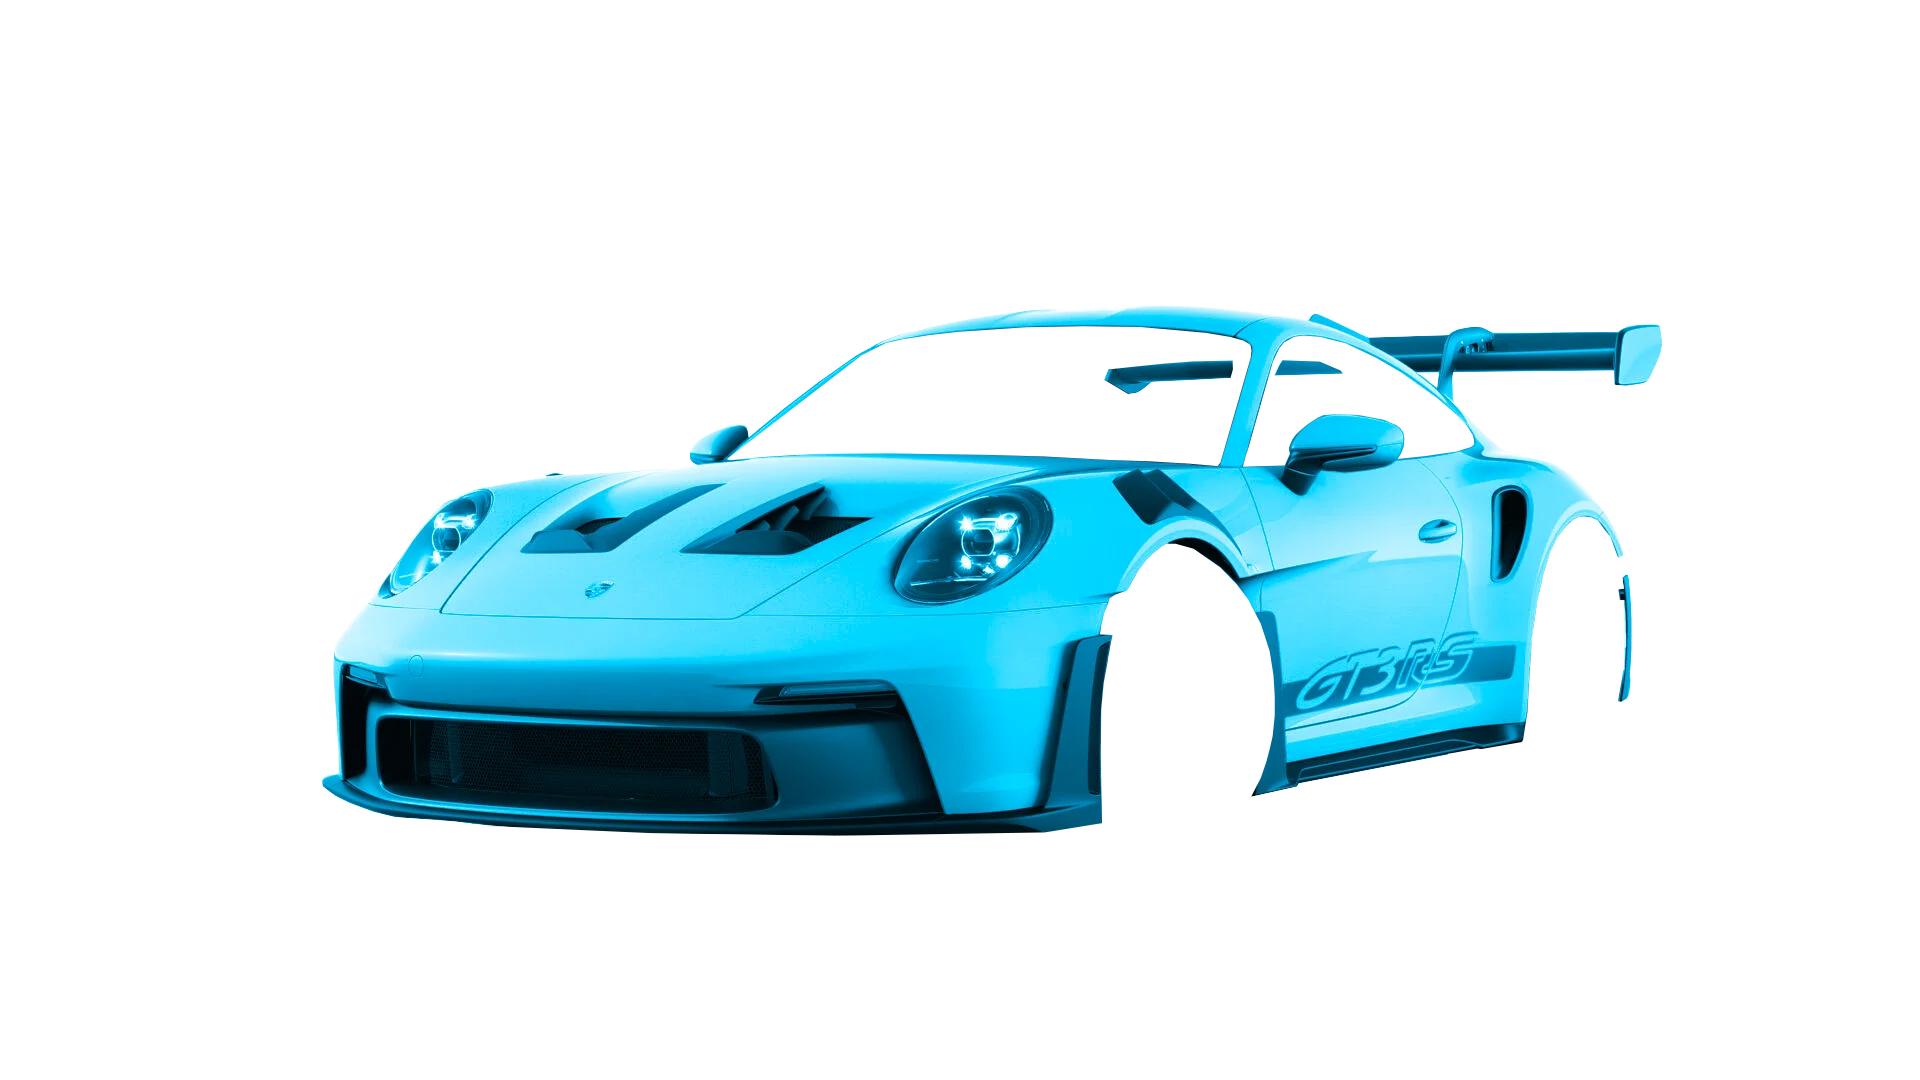 Porsche CC full blue cover copy